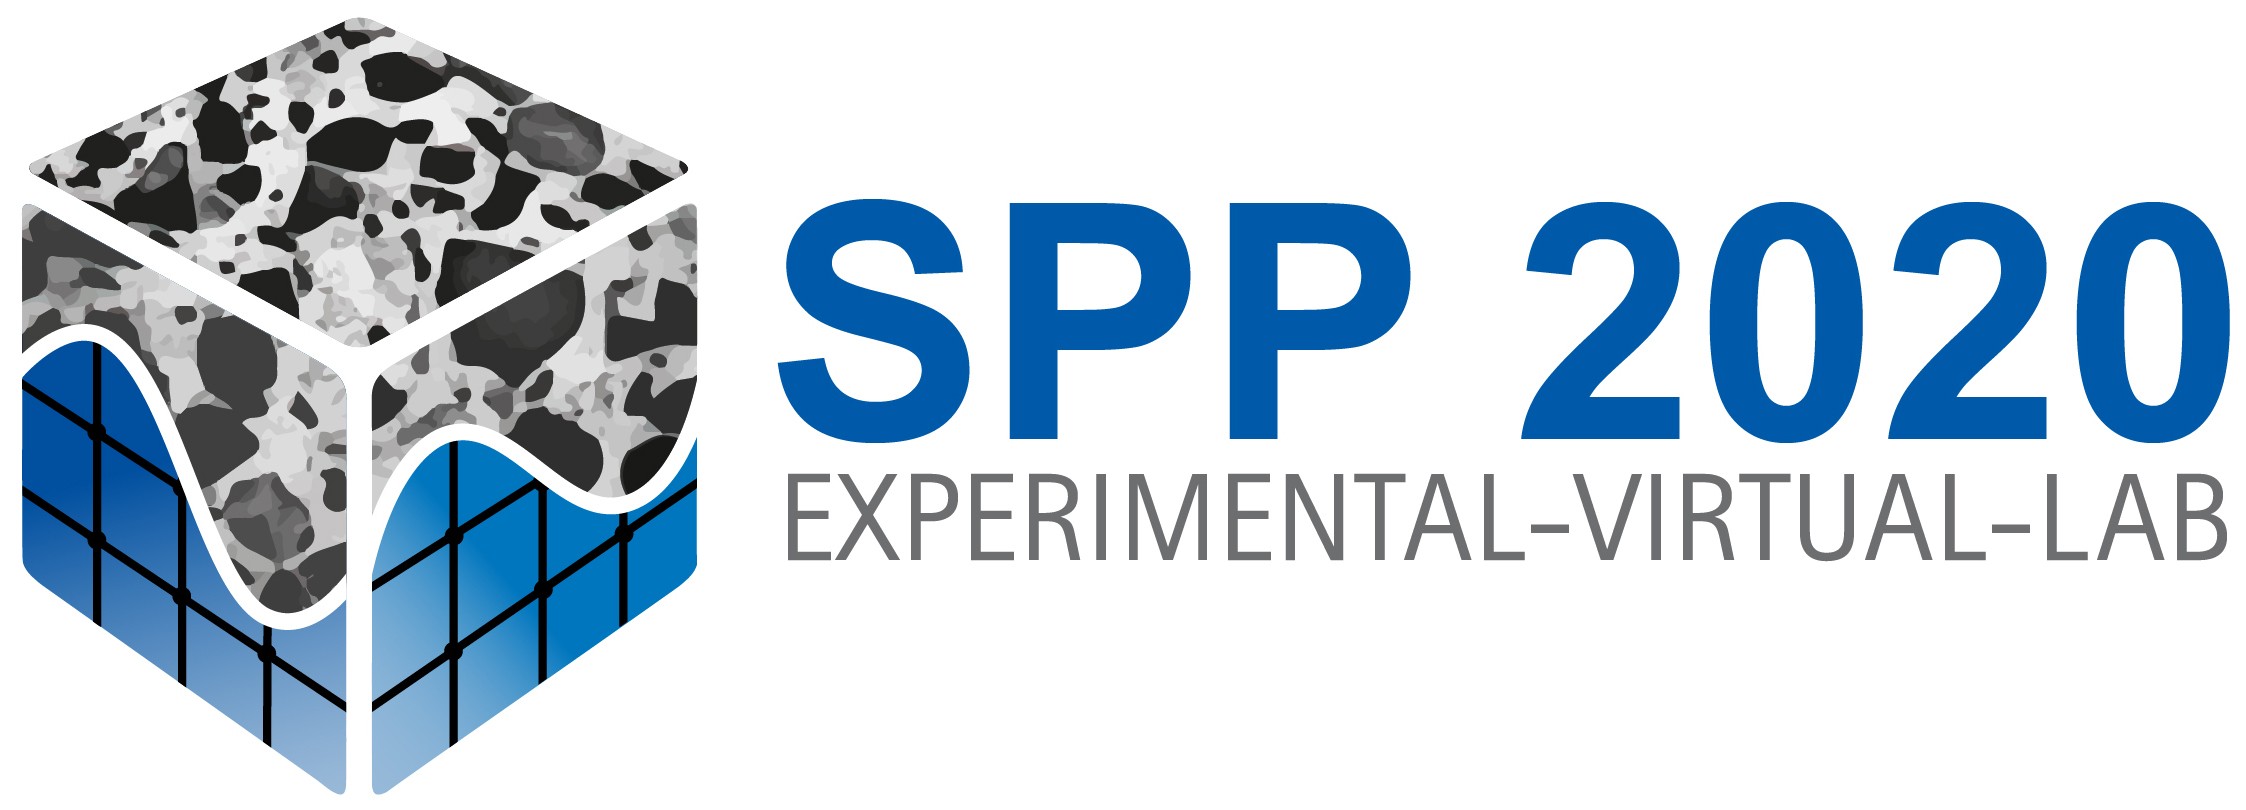 Logo SPP 2020 Experimental-Virtual-Lab